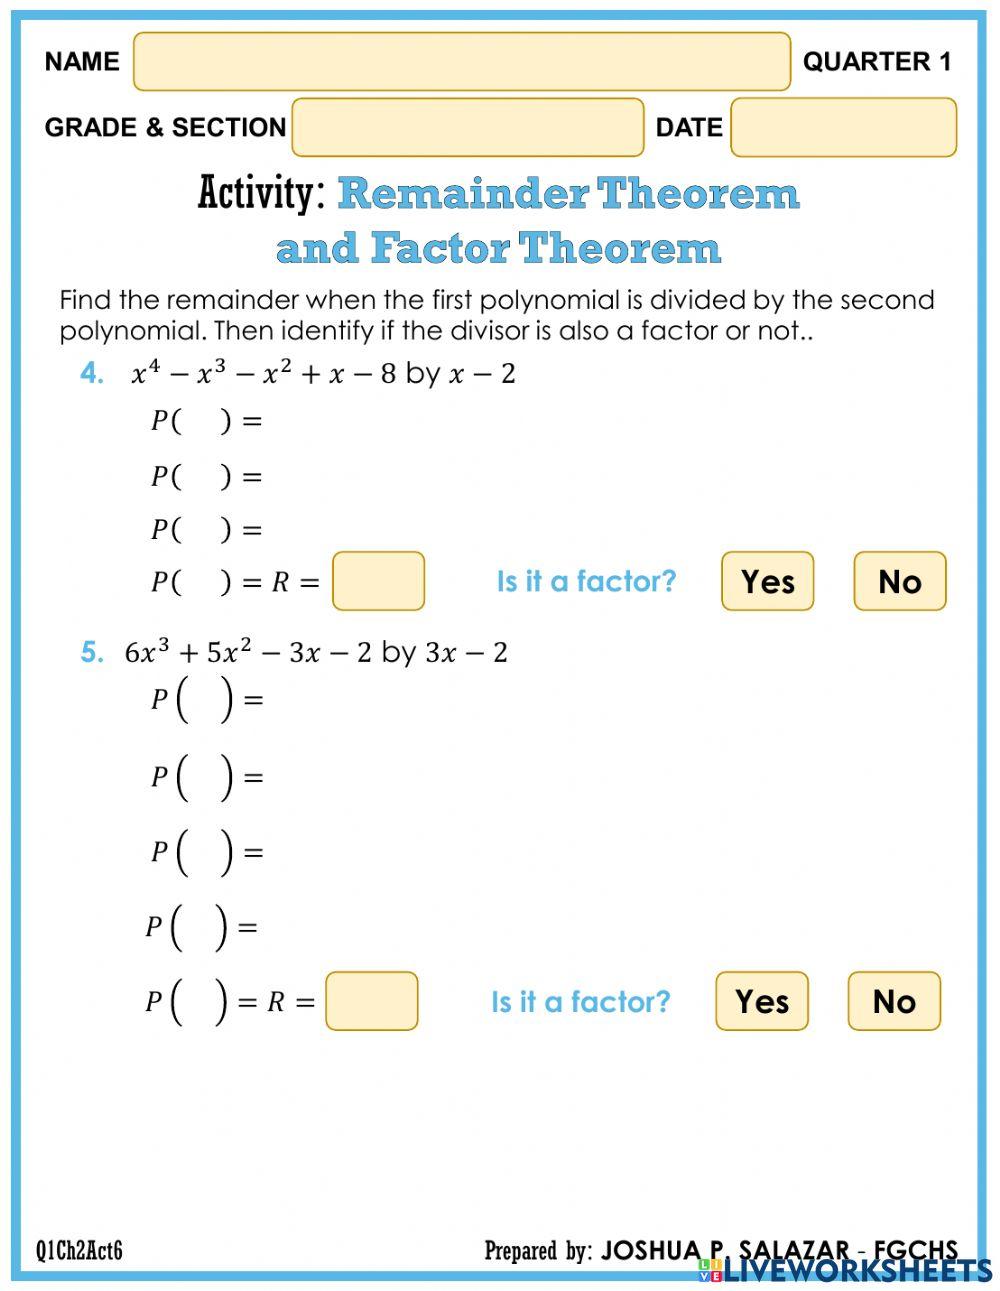 Remainder Theorem and Factor Theorem